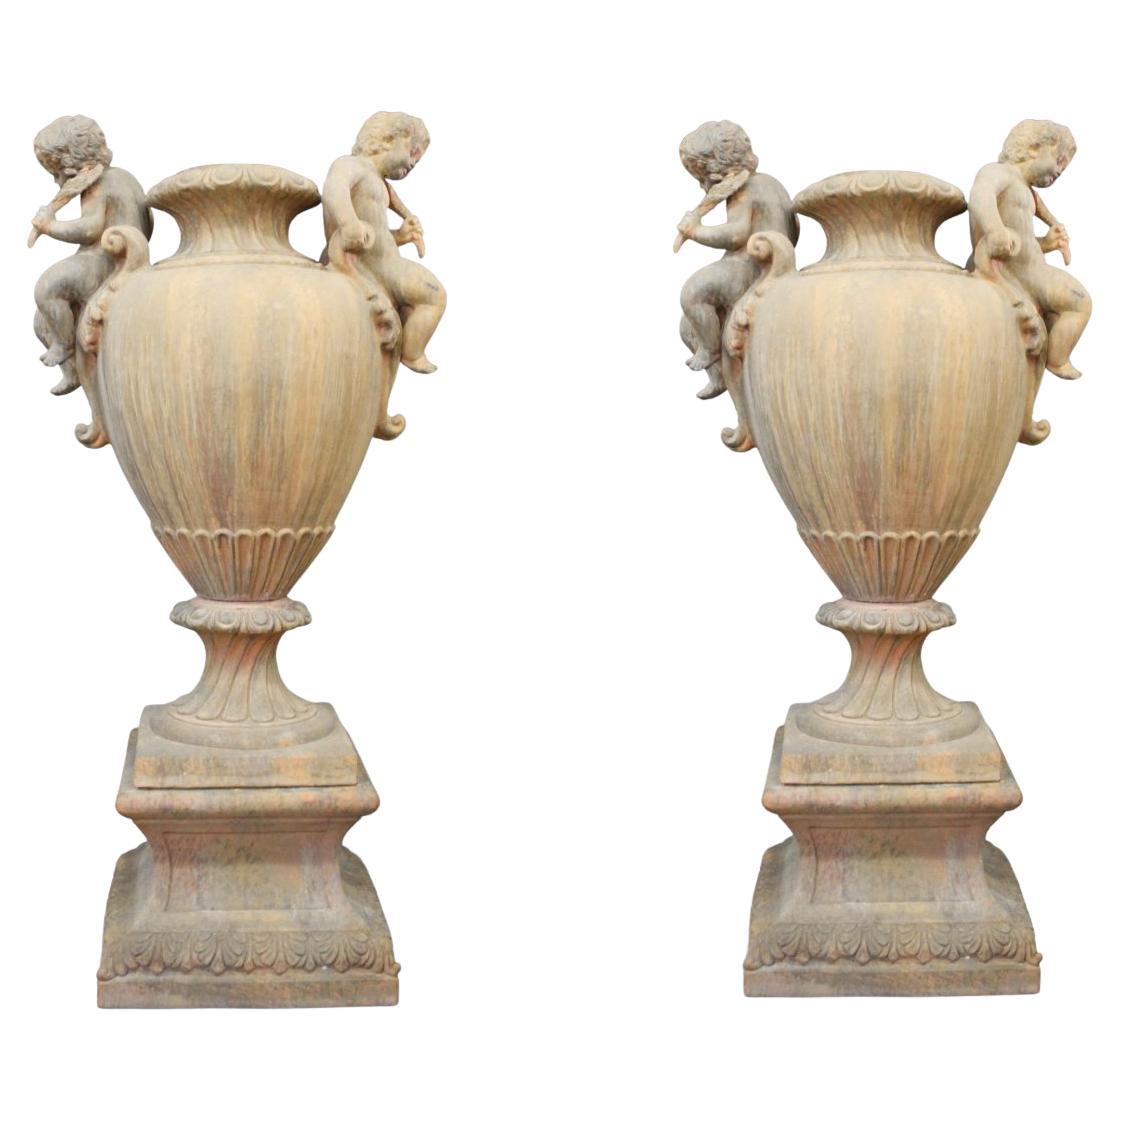 Pair of large terracotta vases